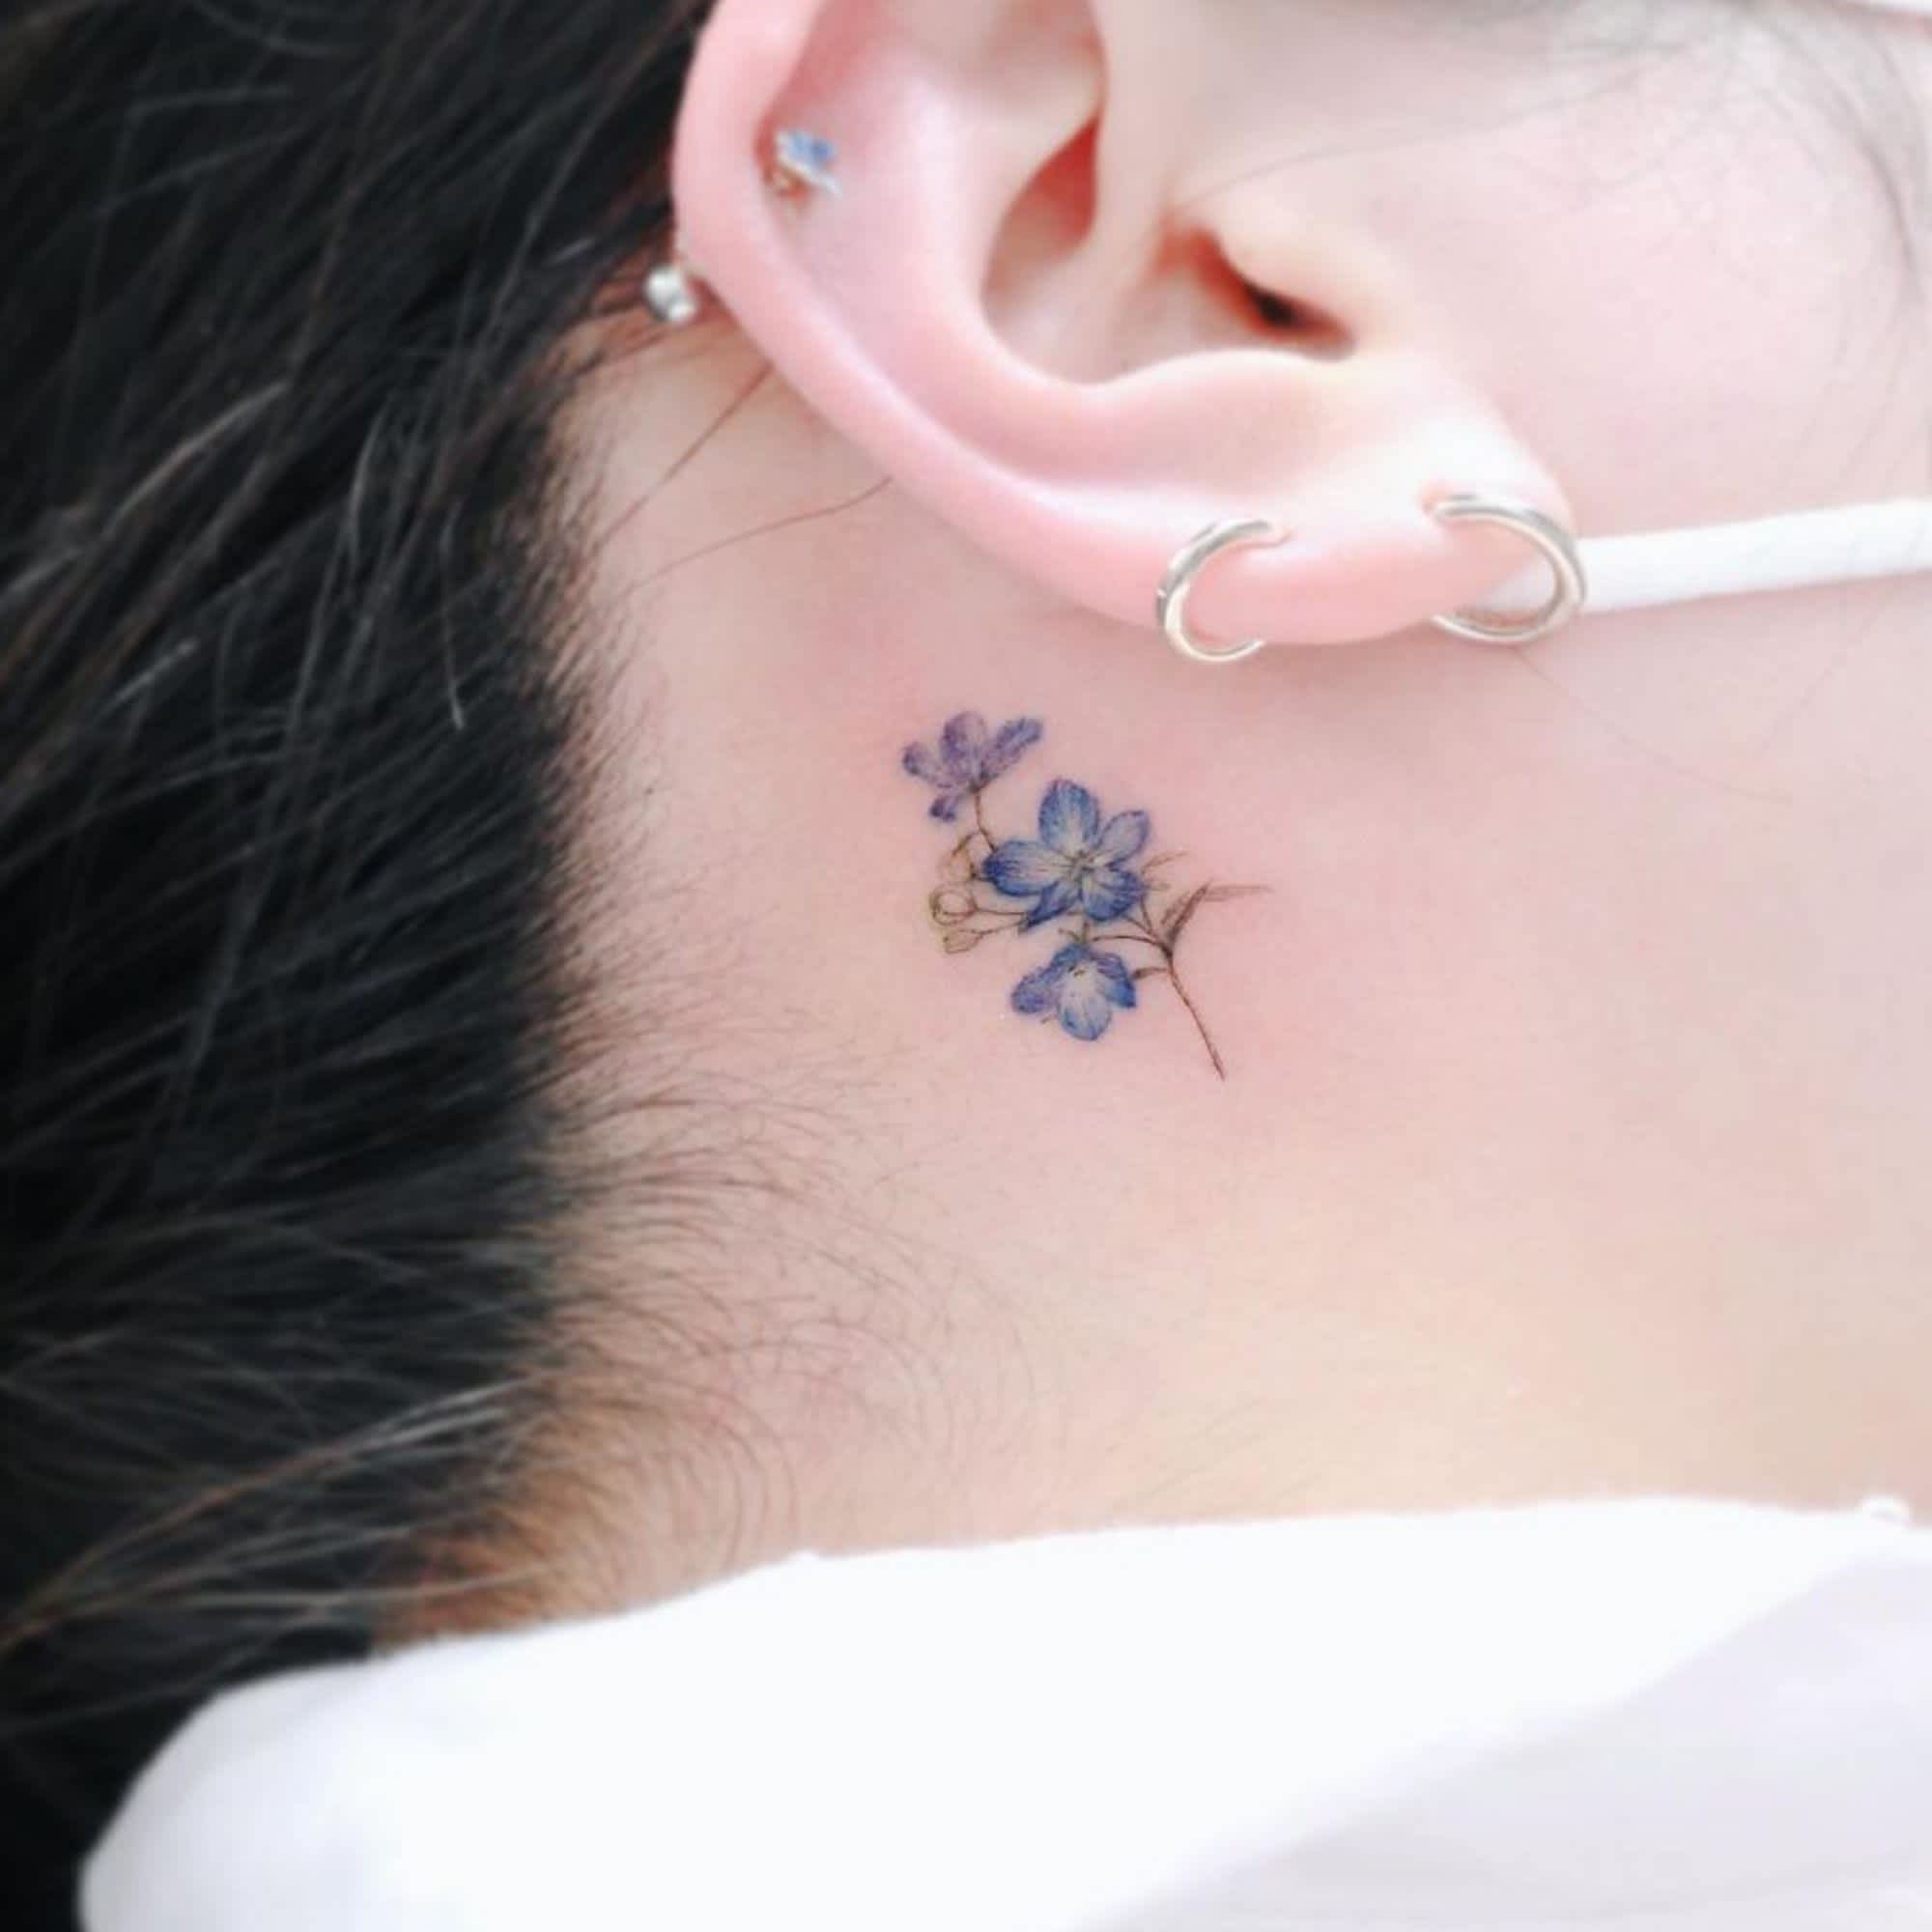 12 Cute Tattoo Ideas For Behind Your Ear - POPSUGAR Australia